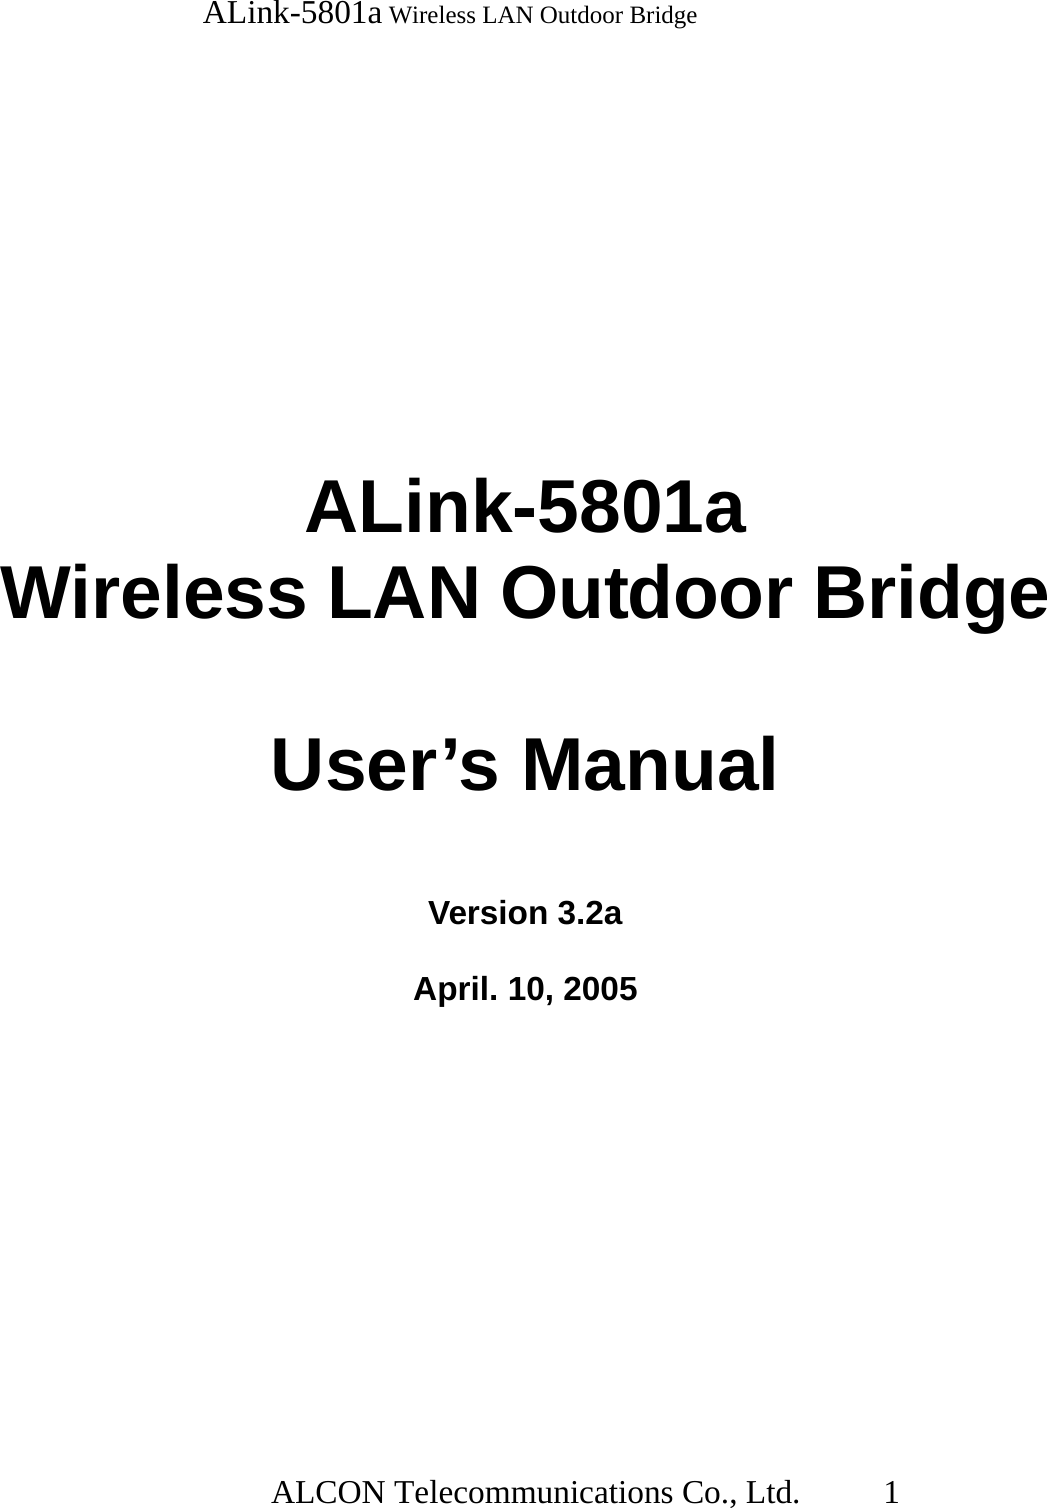   ALink-5801a Wireless LAN Outdoor Bridge                  ALCON Telecommunications Co., Ltd.   1       ALink-5801a  Wireless LAN Outdoor Bridge  User’s Manual  Version 3.2a  April. 10, 2005 